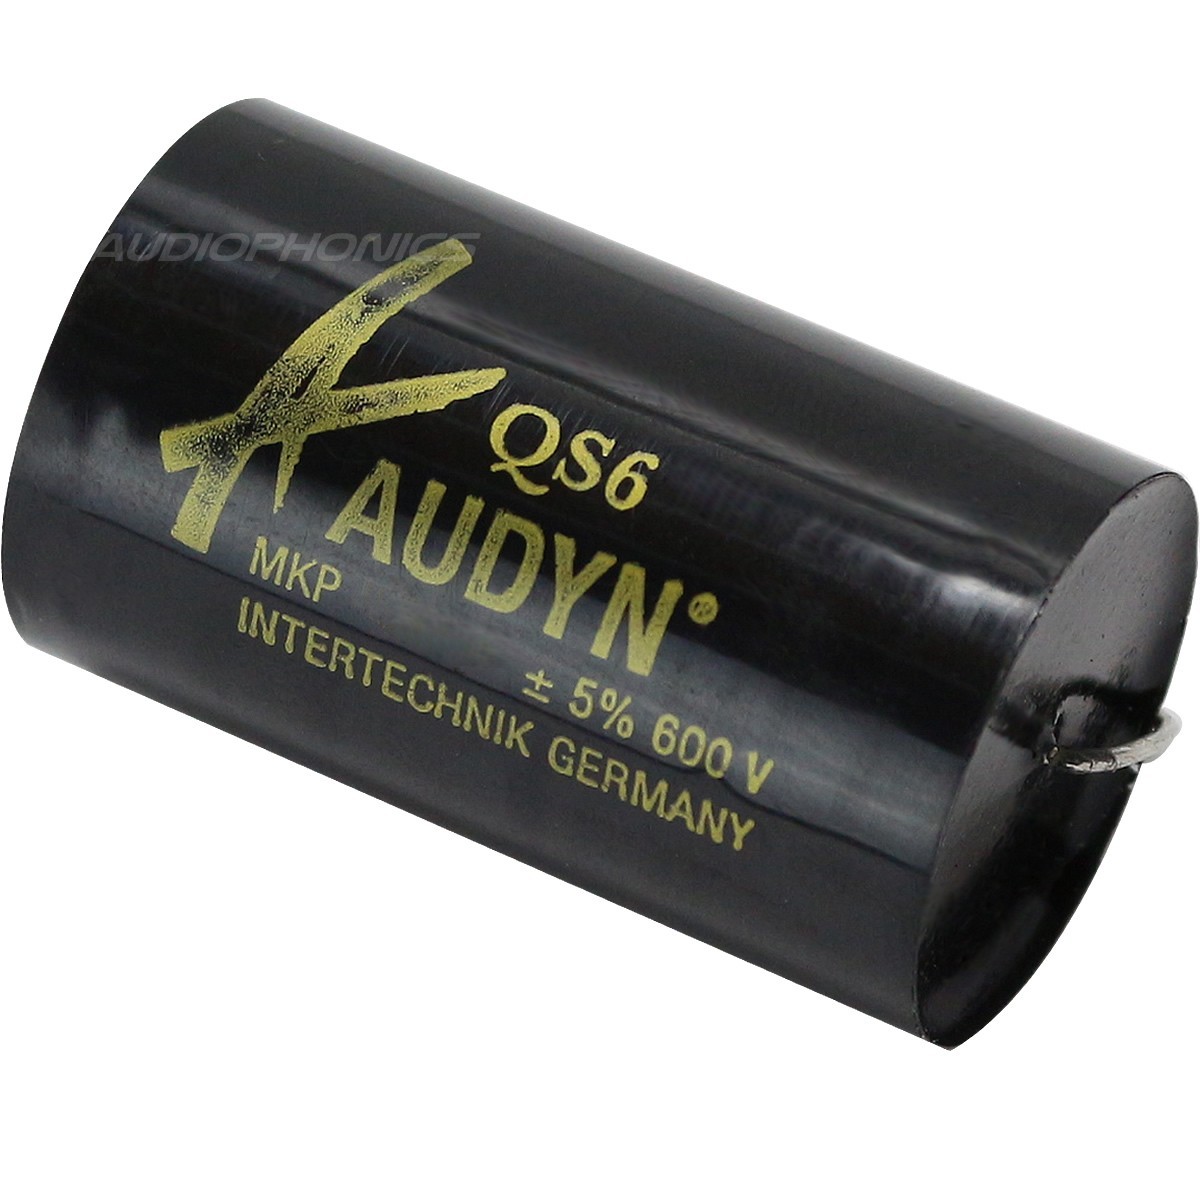 AUDYN CAP QS6 Condensateur MKP 600V 10µF